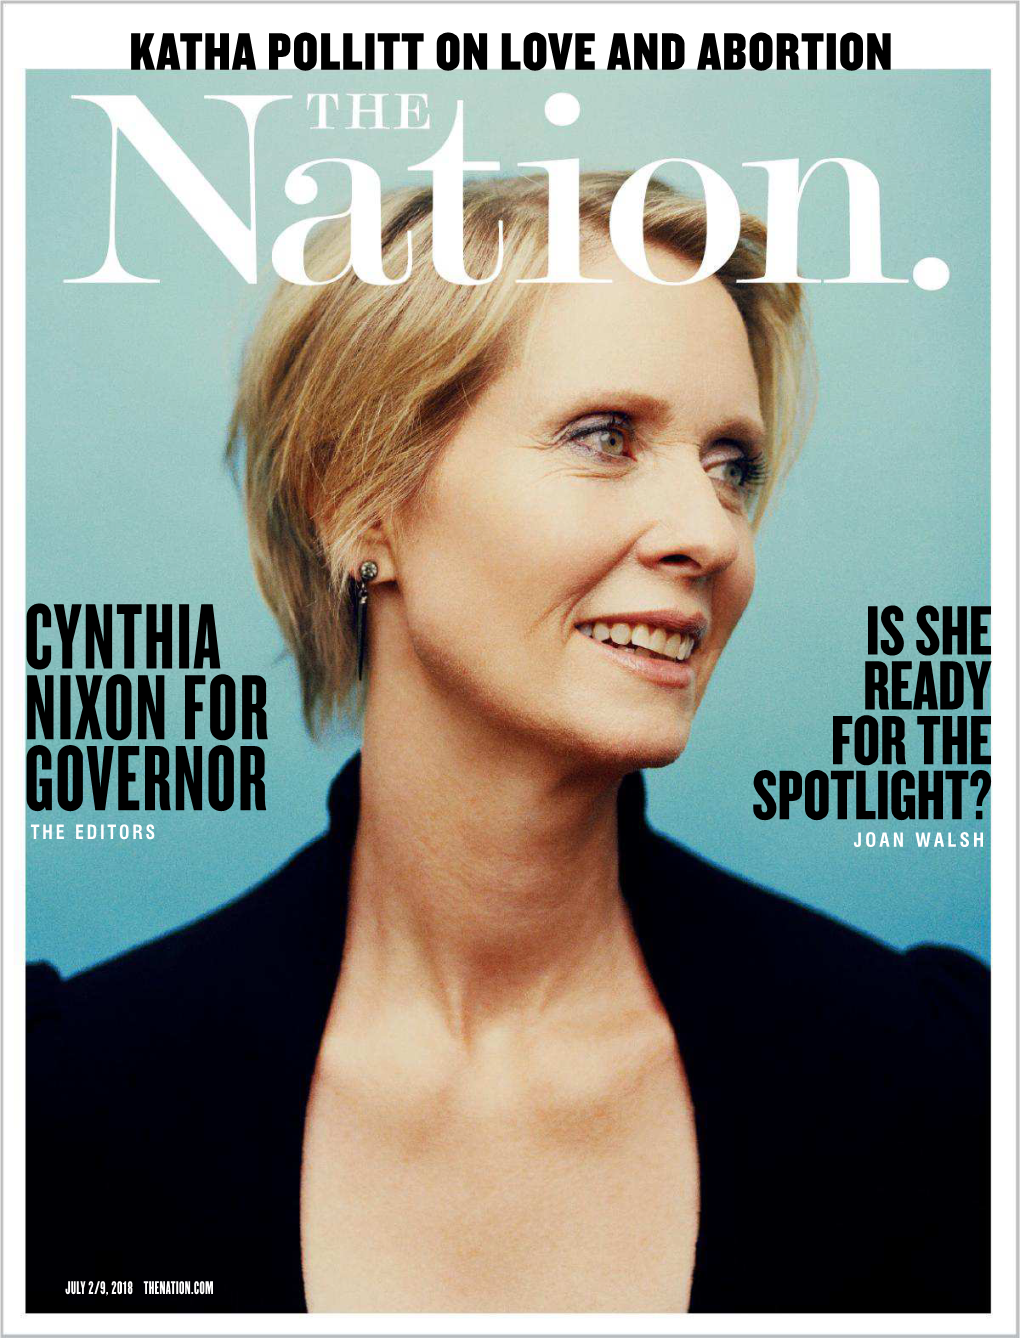 Cynthia Nixon for Governor